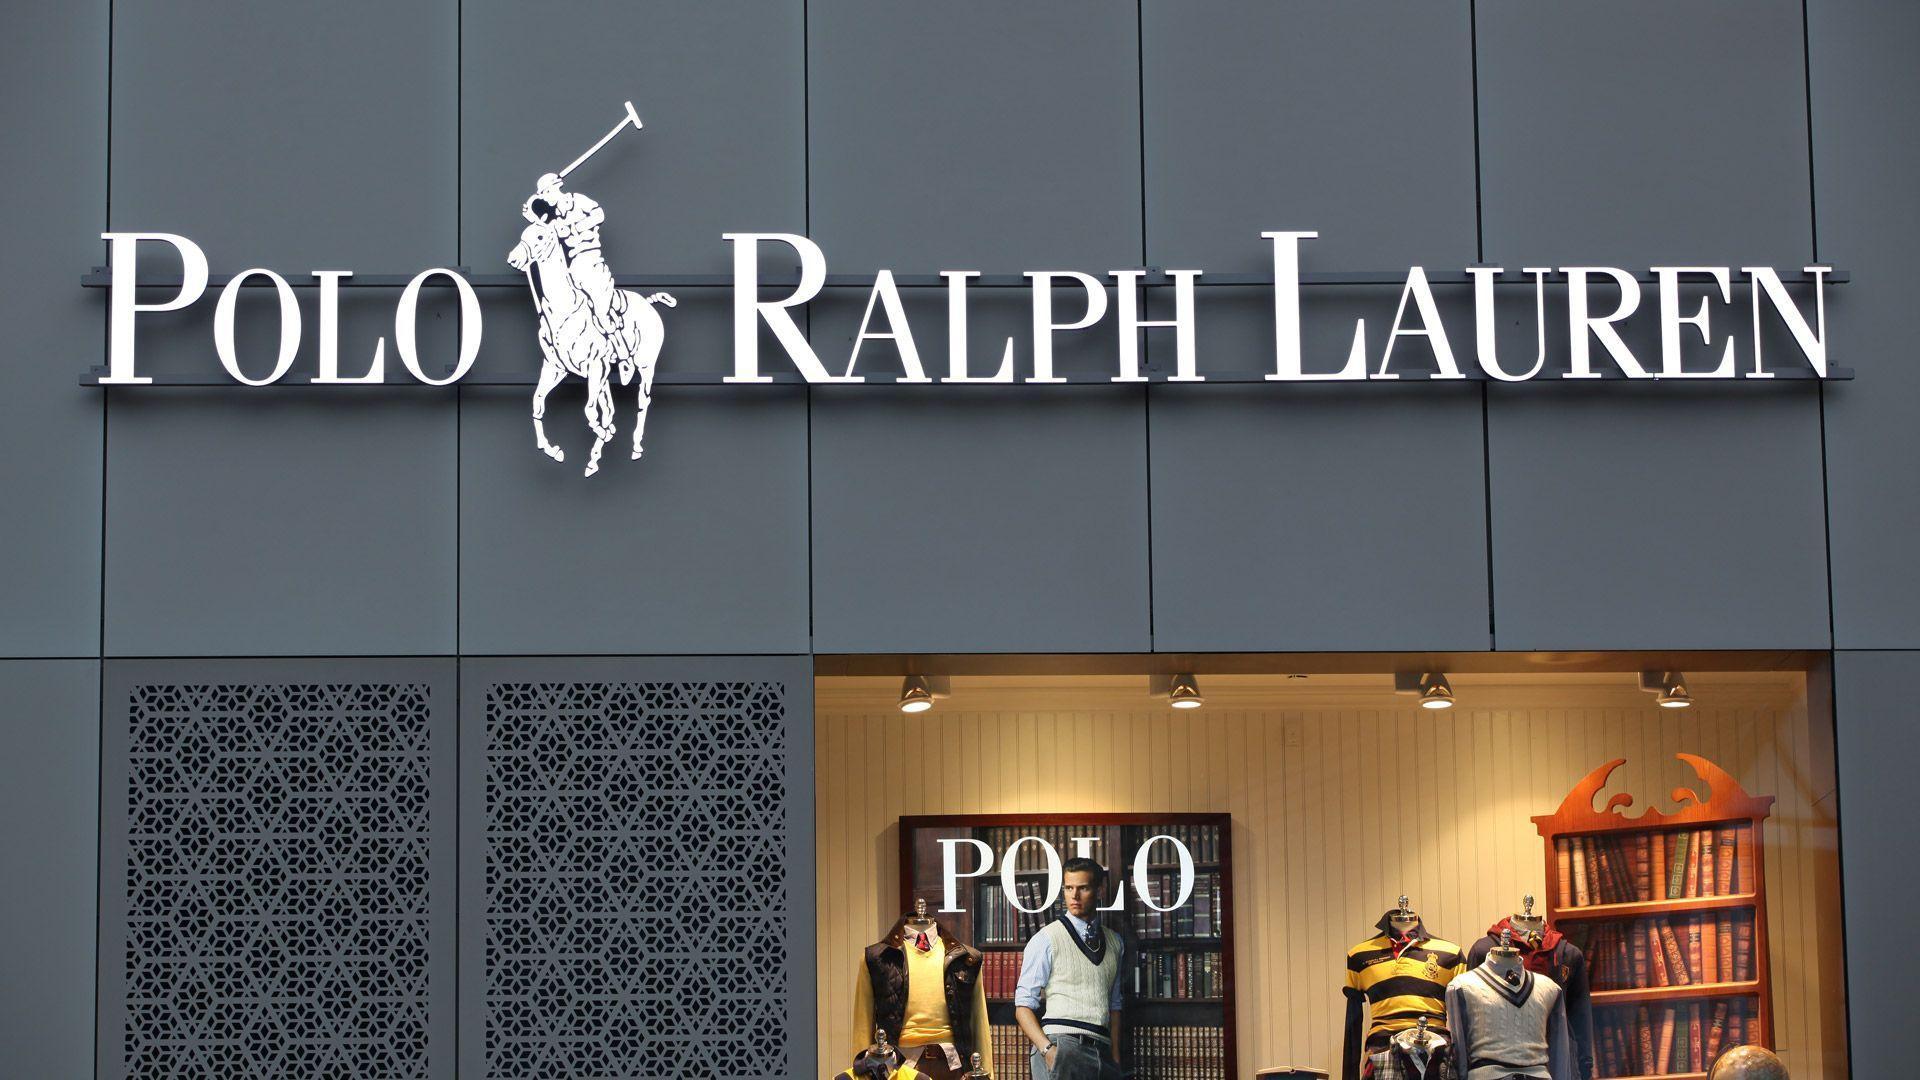 Polo Ralph Lauren Logo Wallpaper For Ipad